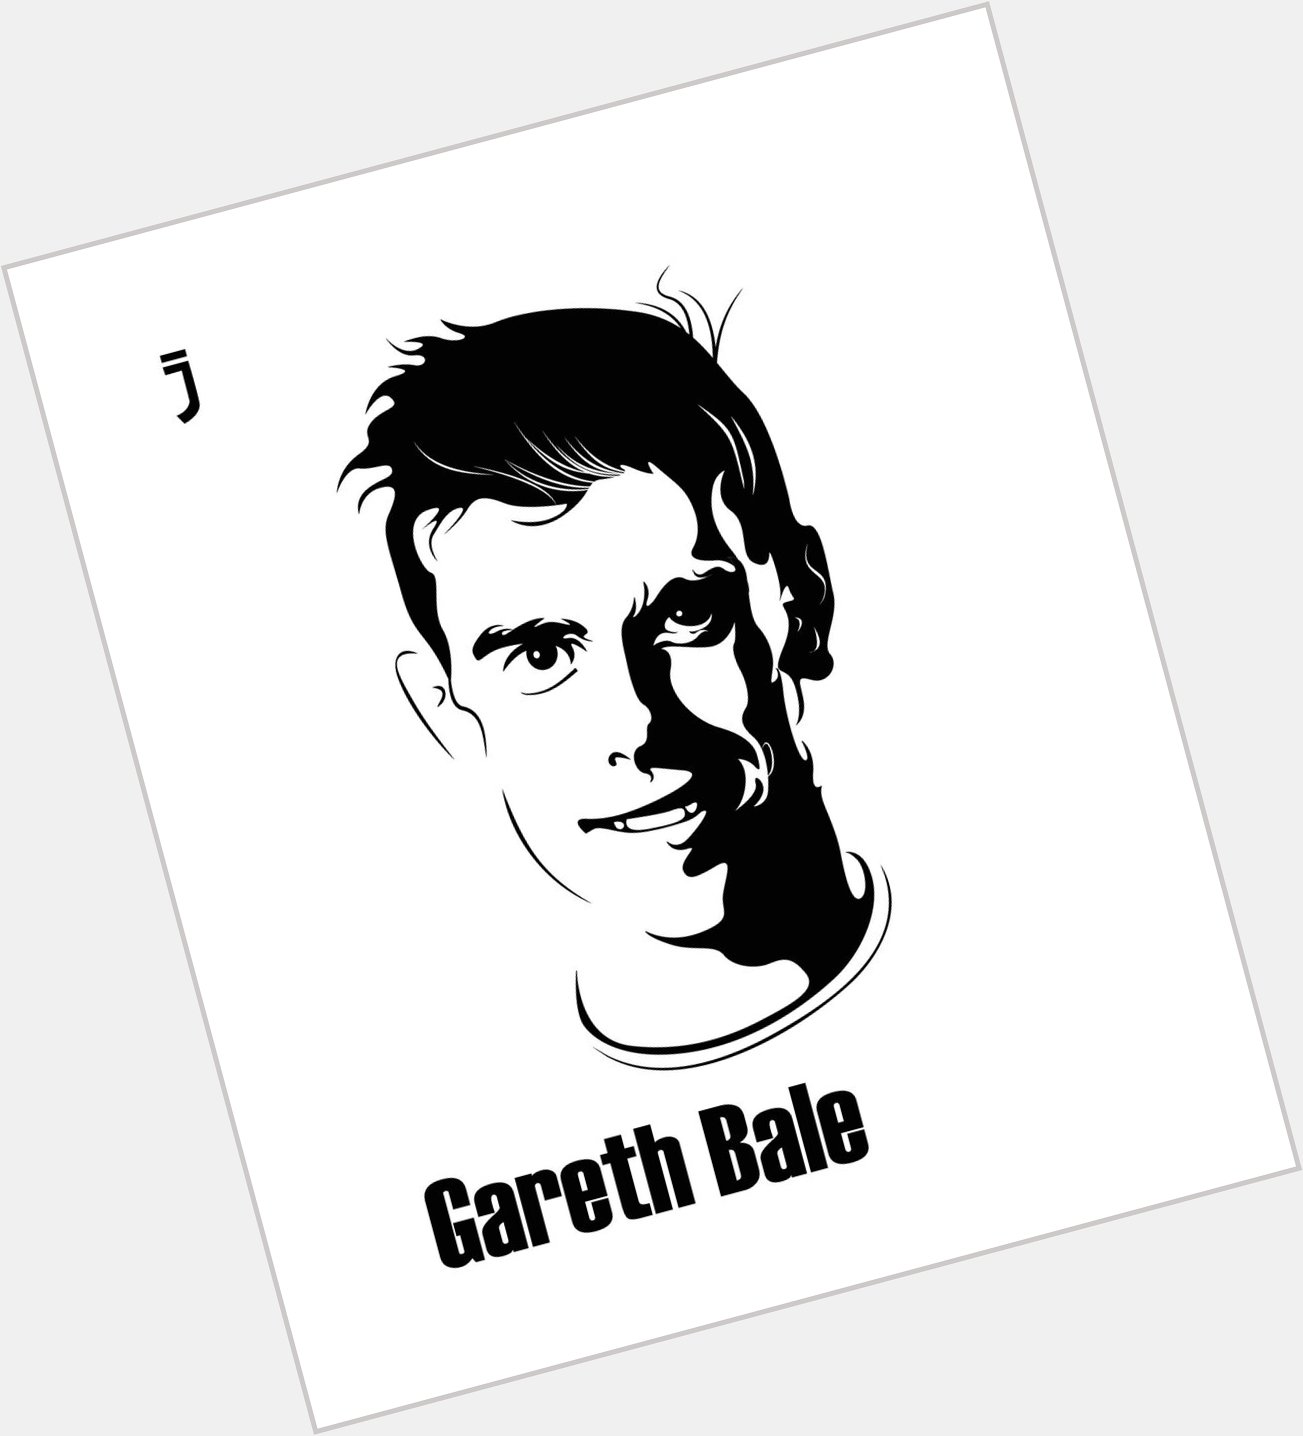 Happy Birthday Gareth Bale  .
.
.   